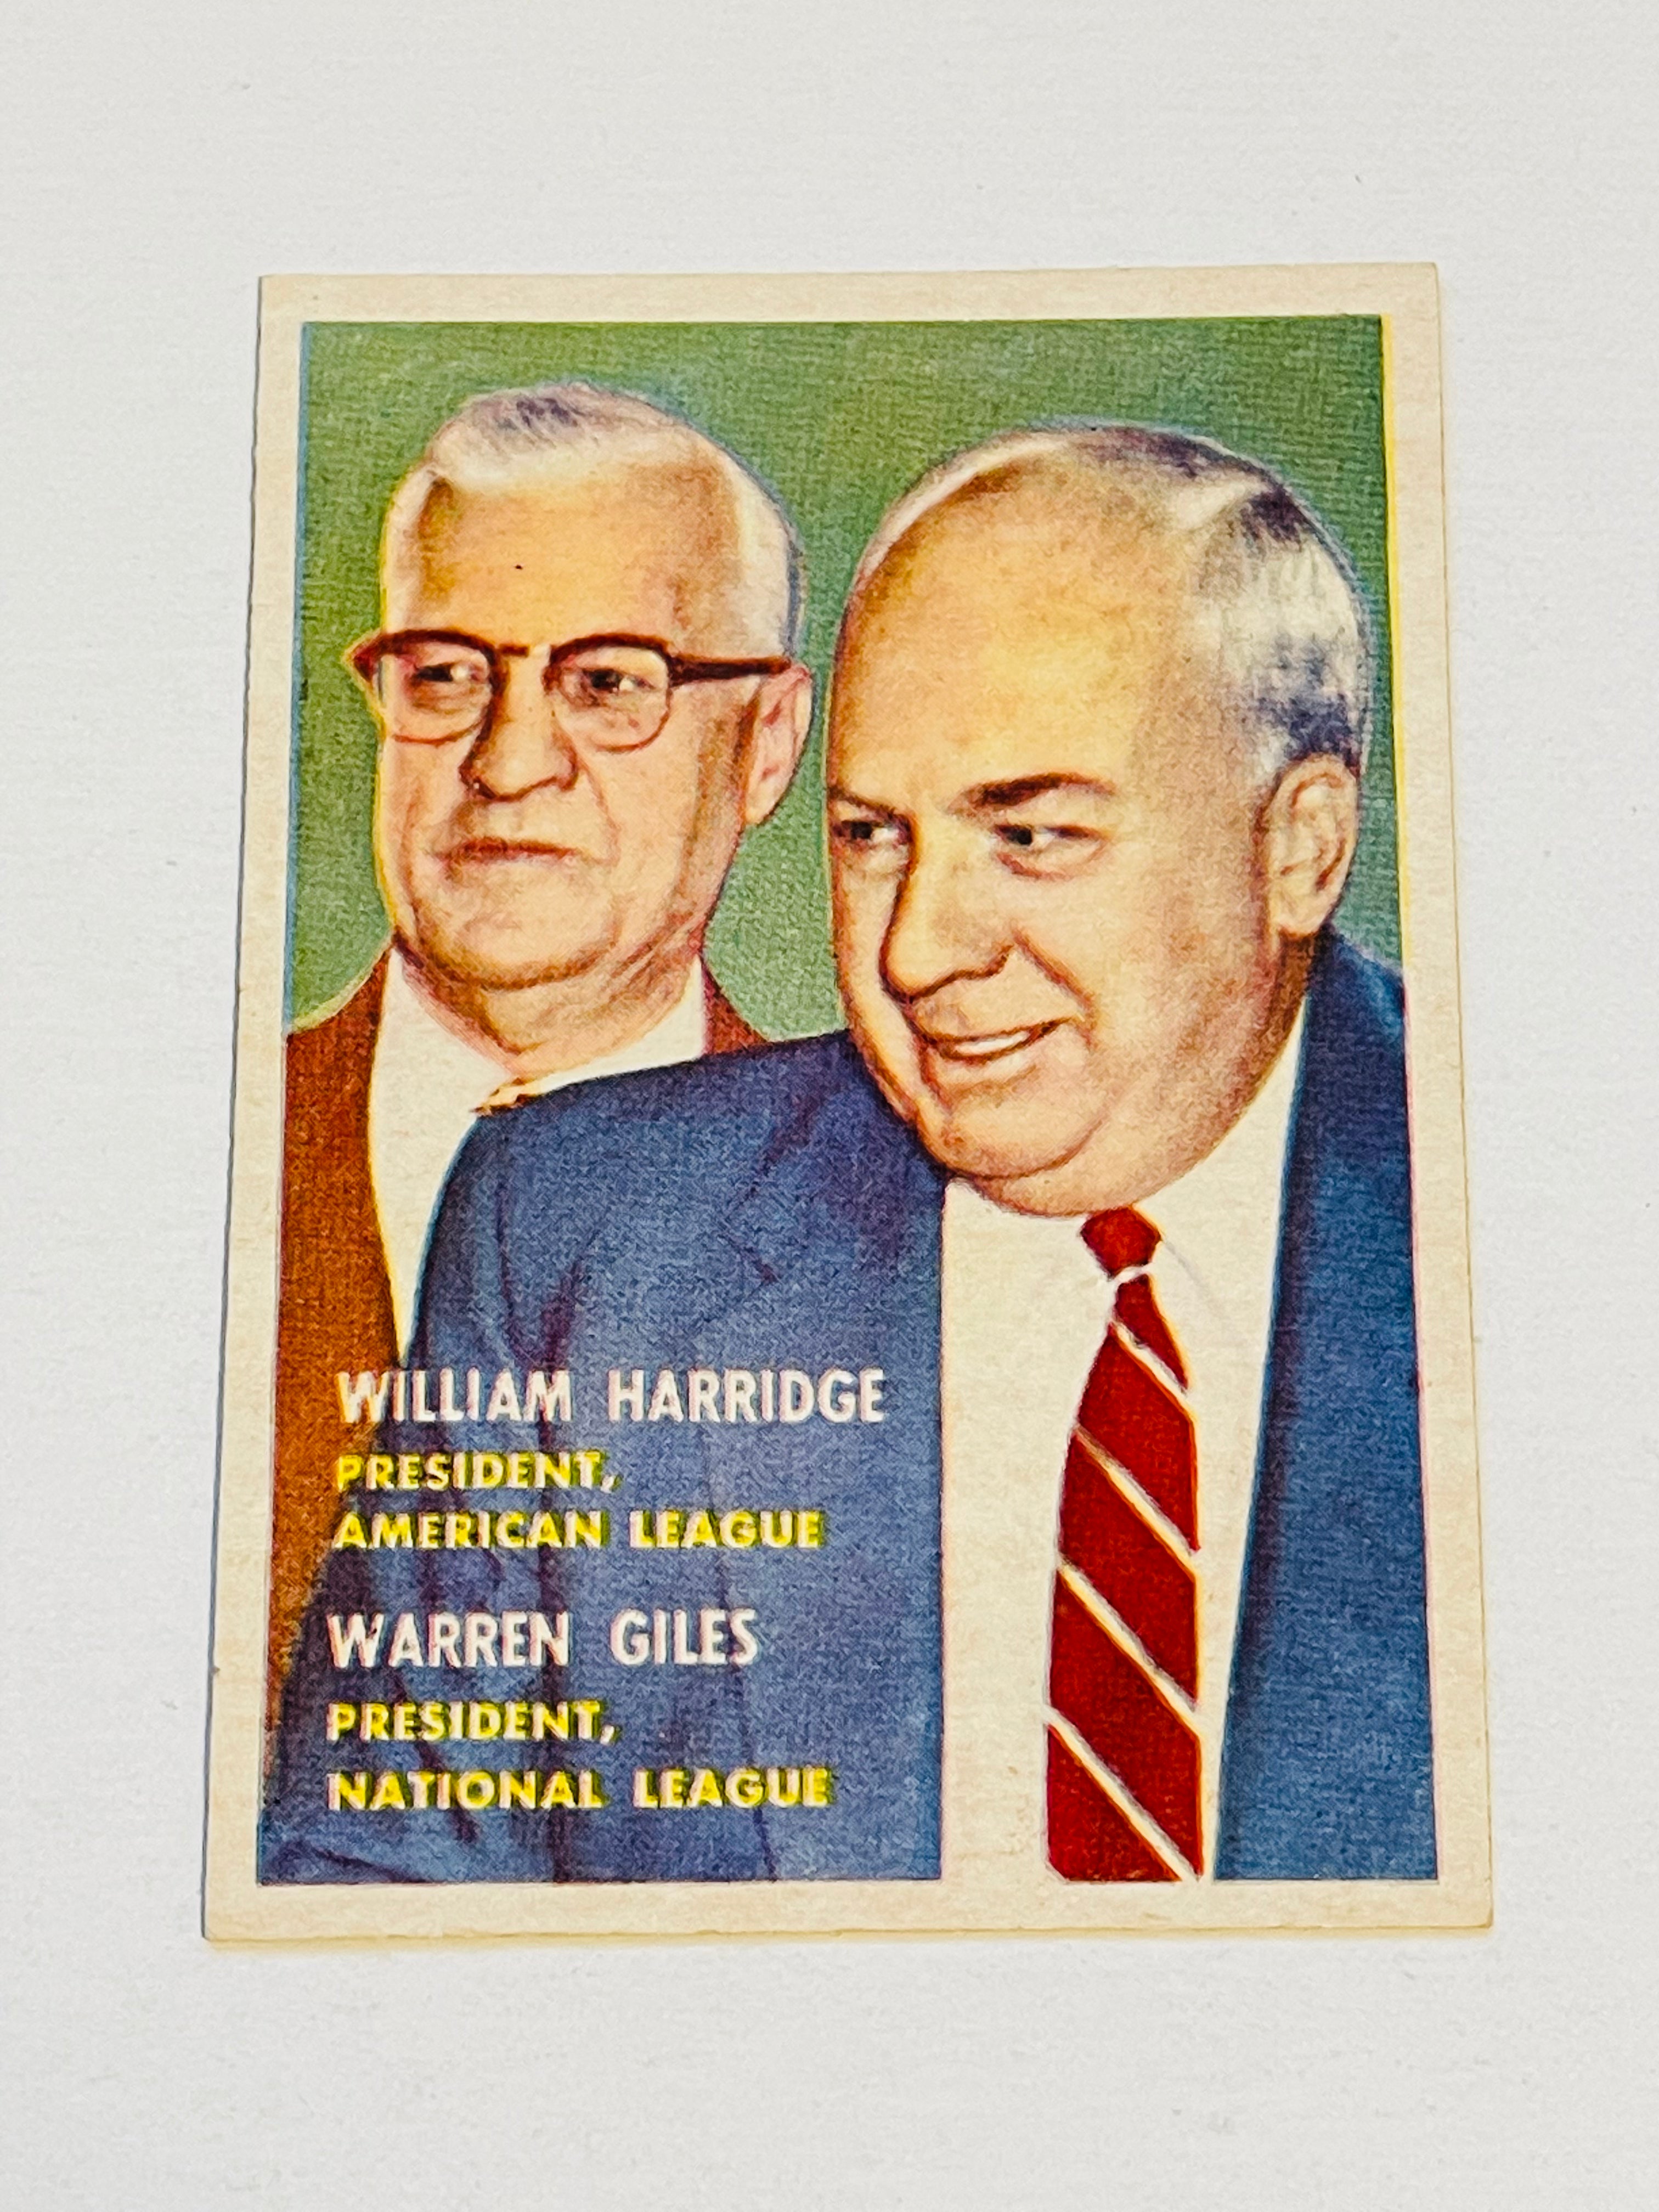 1957 Topps baseball league president high grade #100 card